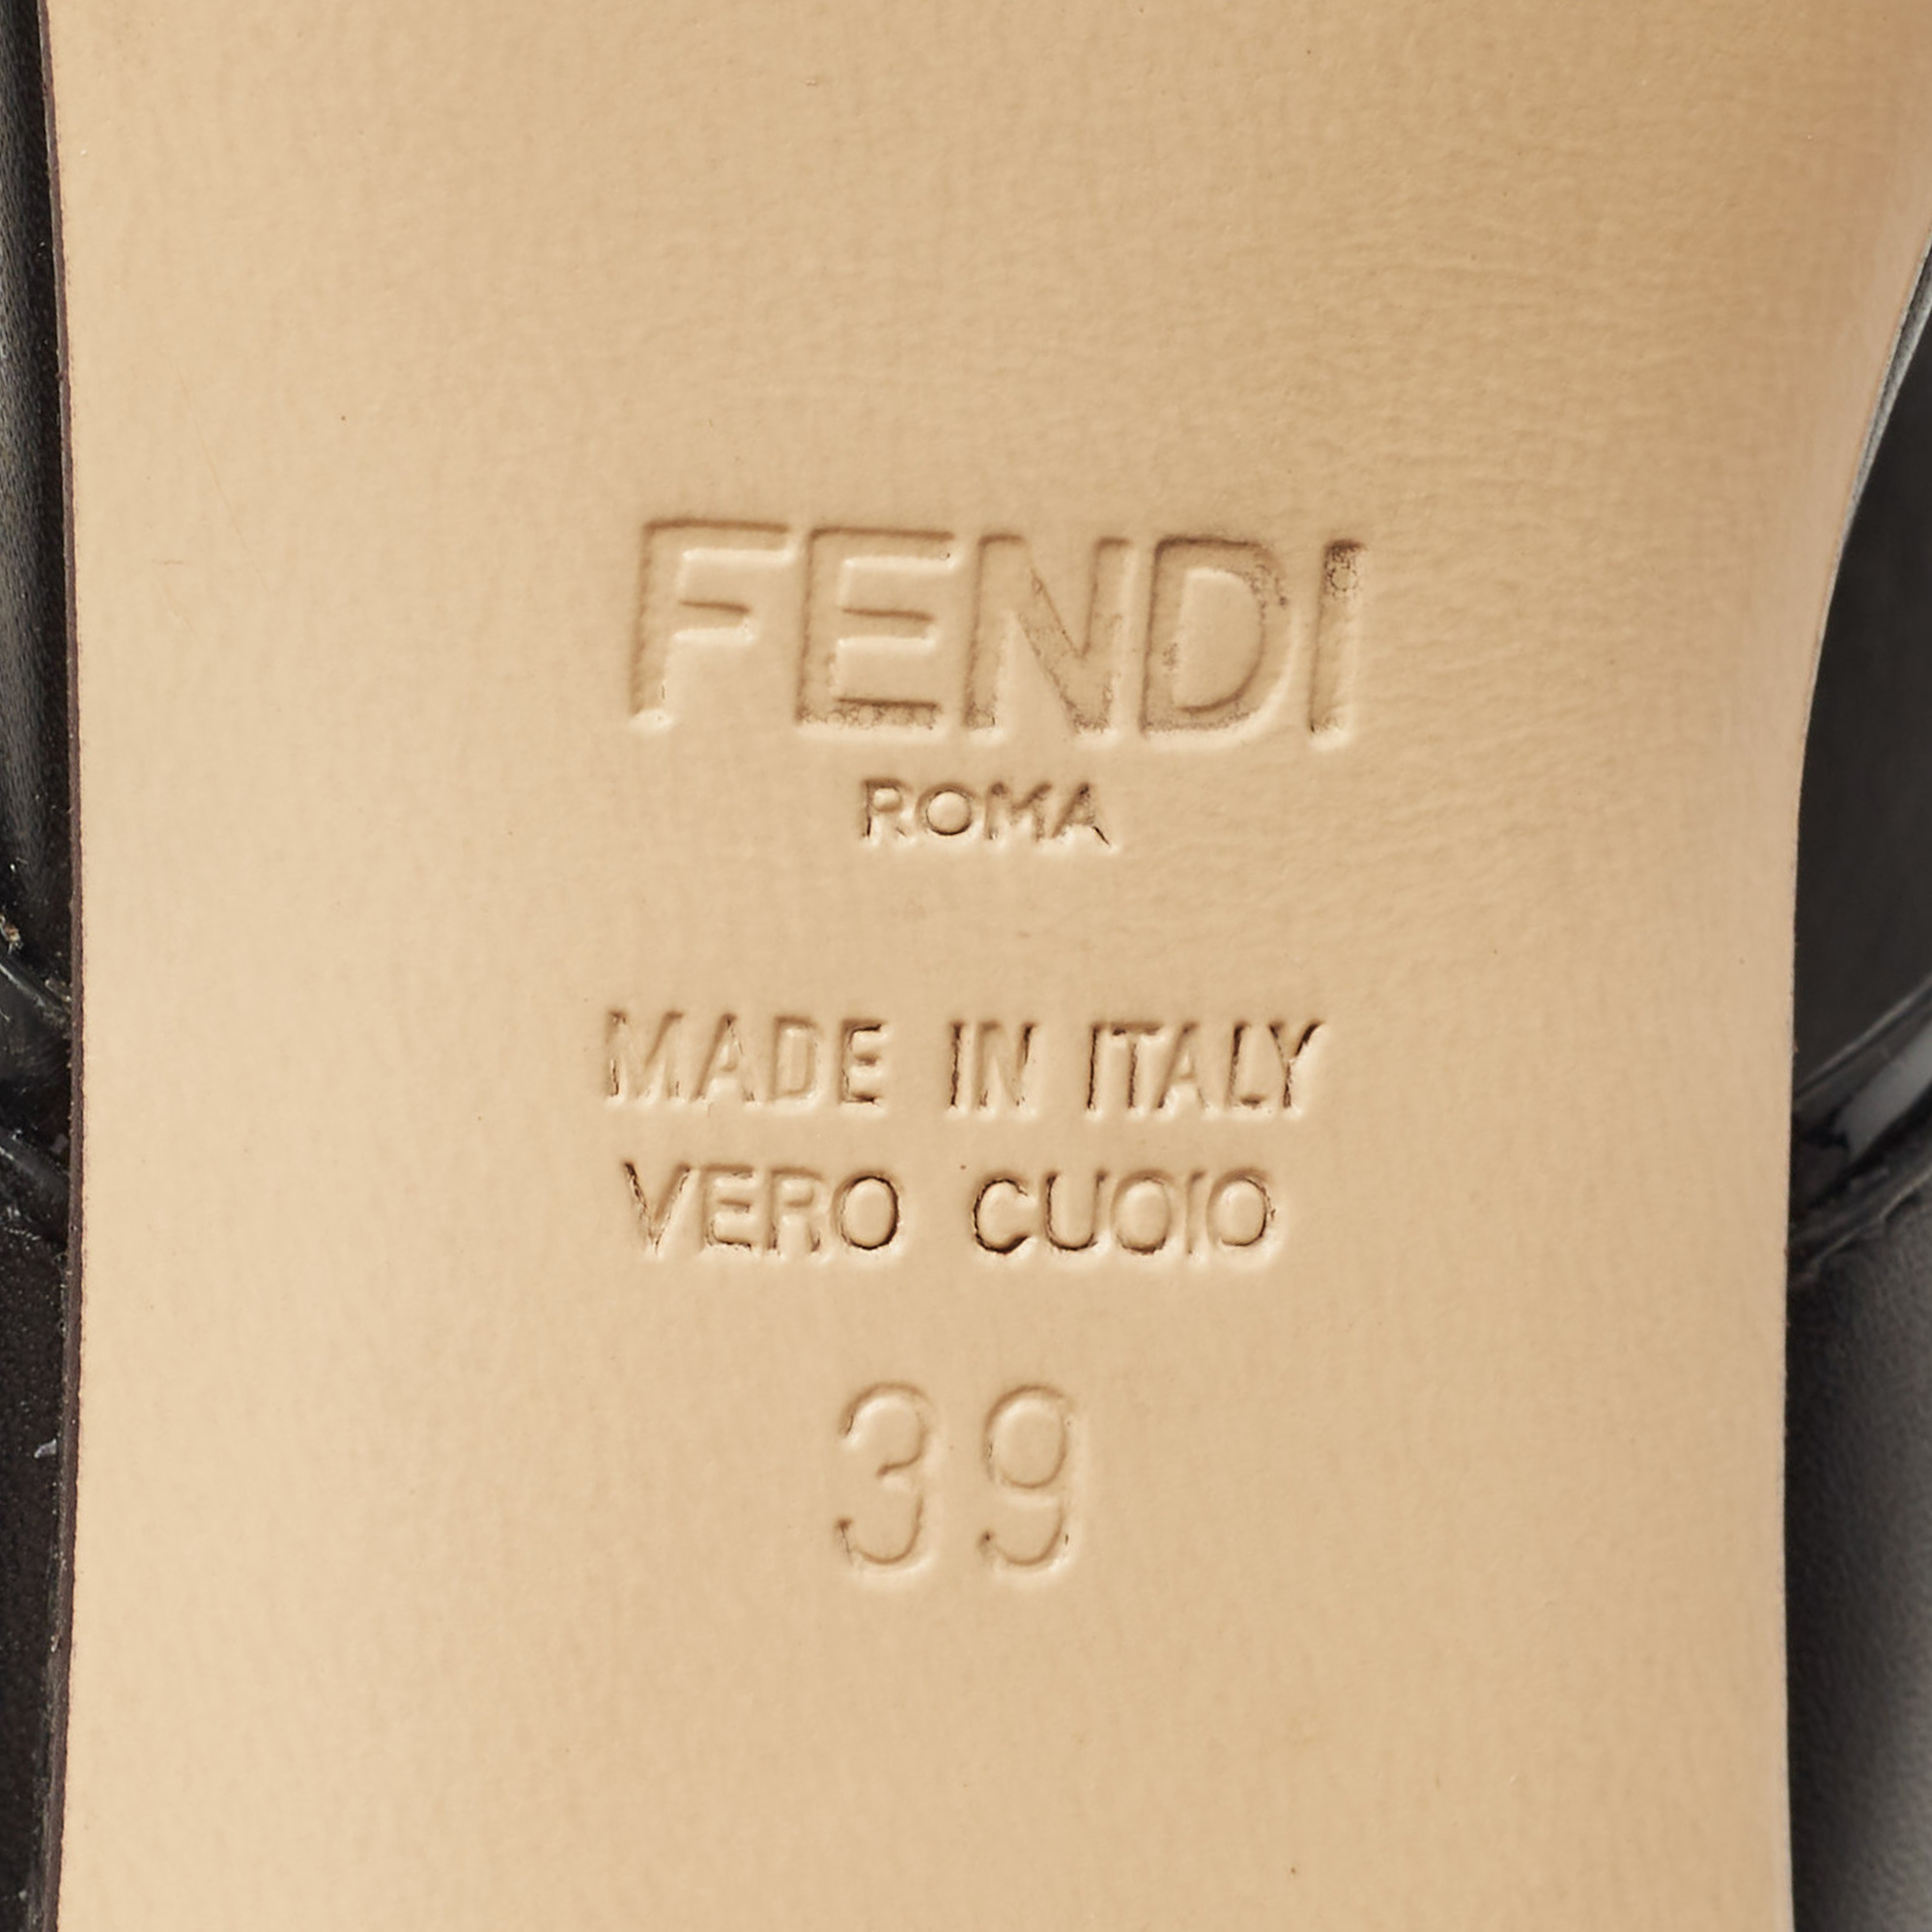 Fendi Black Leather Flowerland Embellished Sandals Size 39